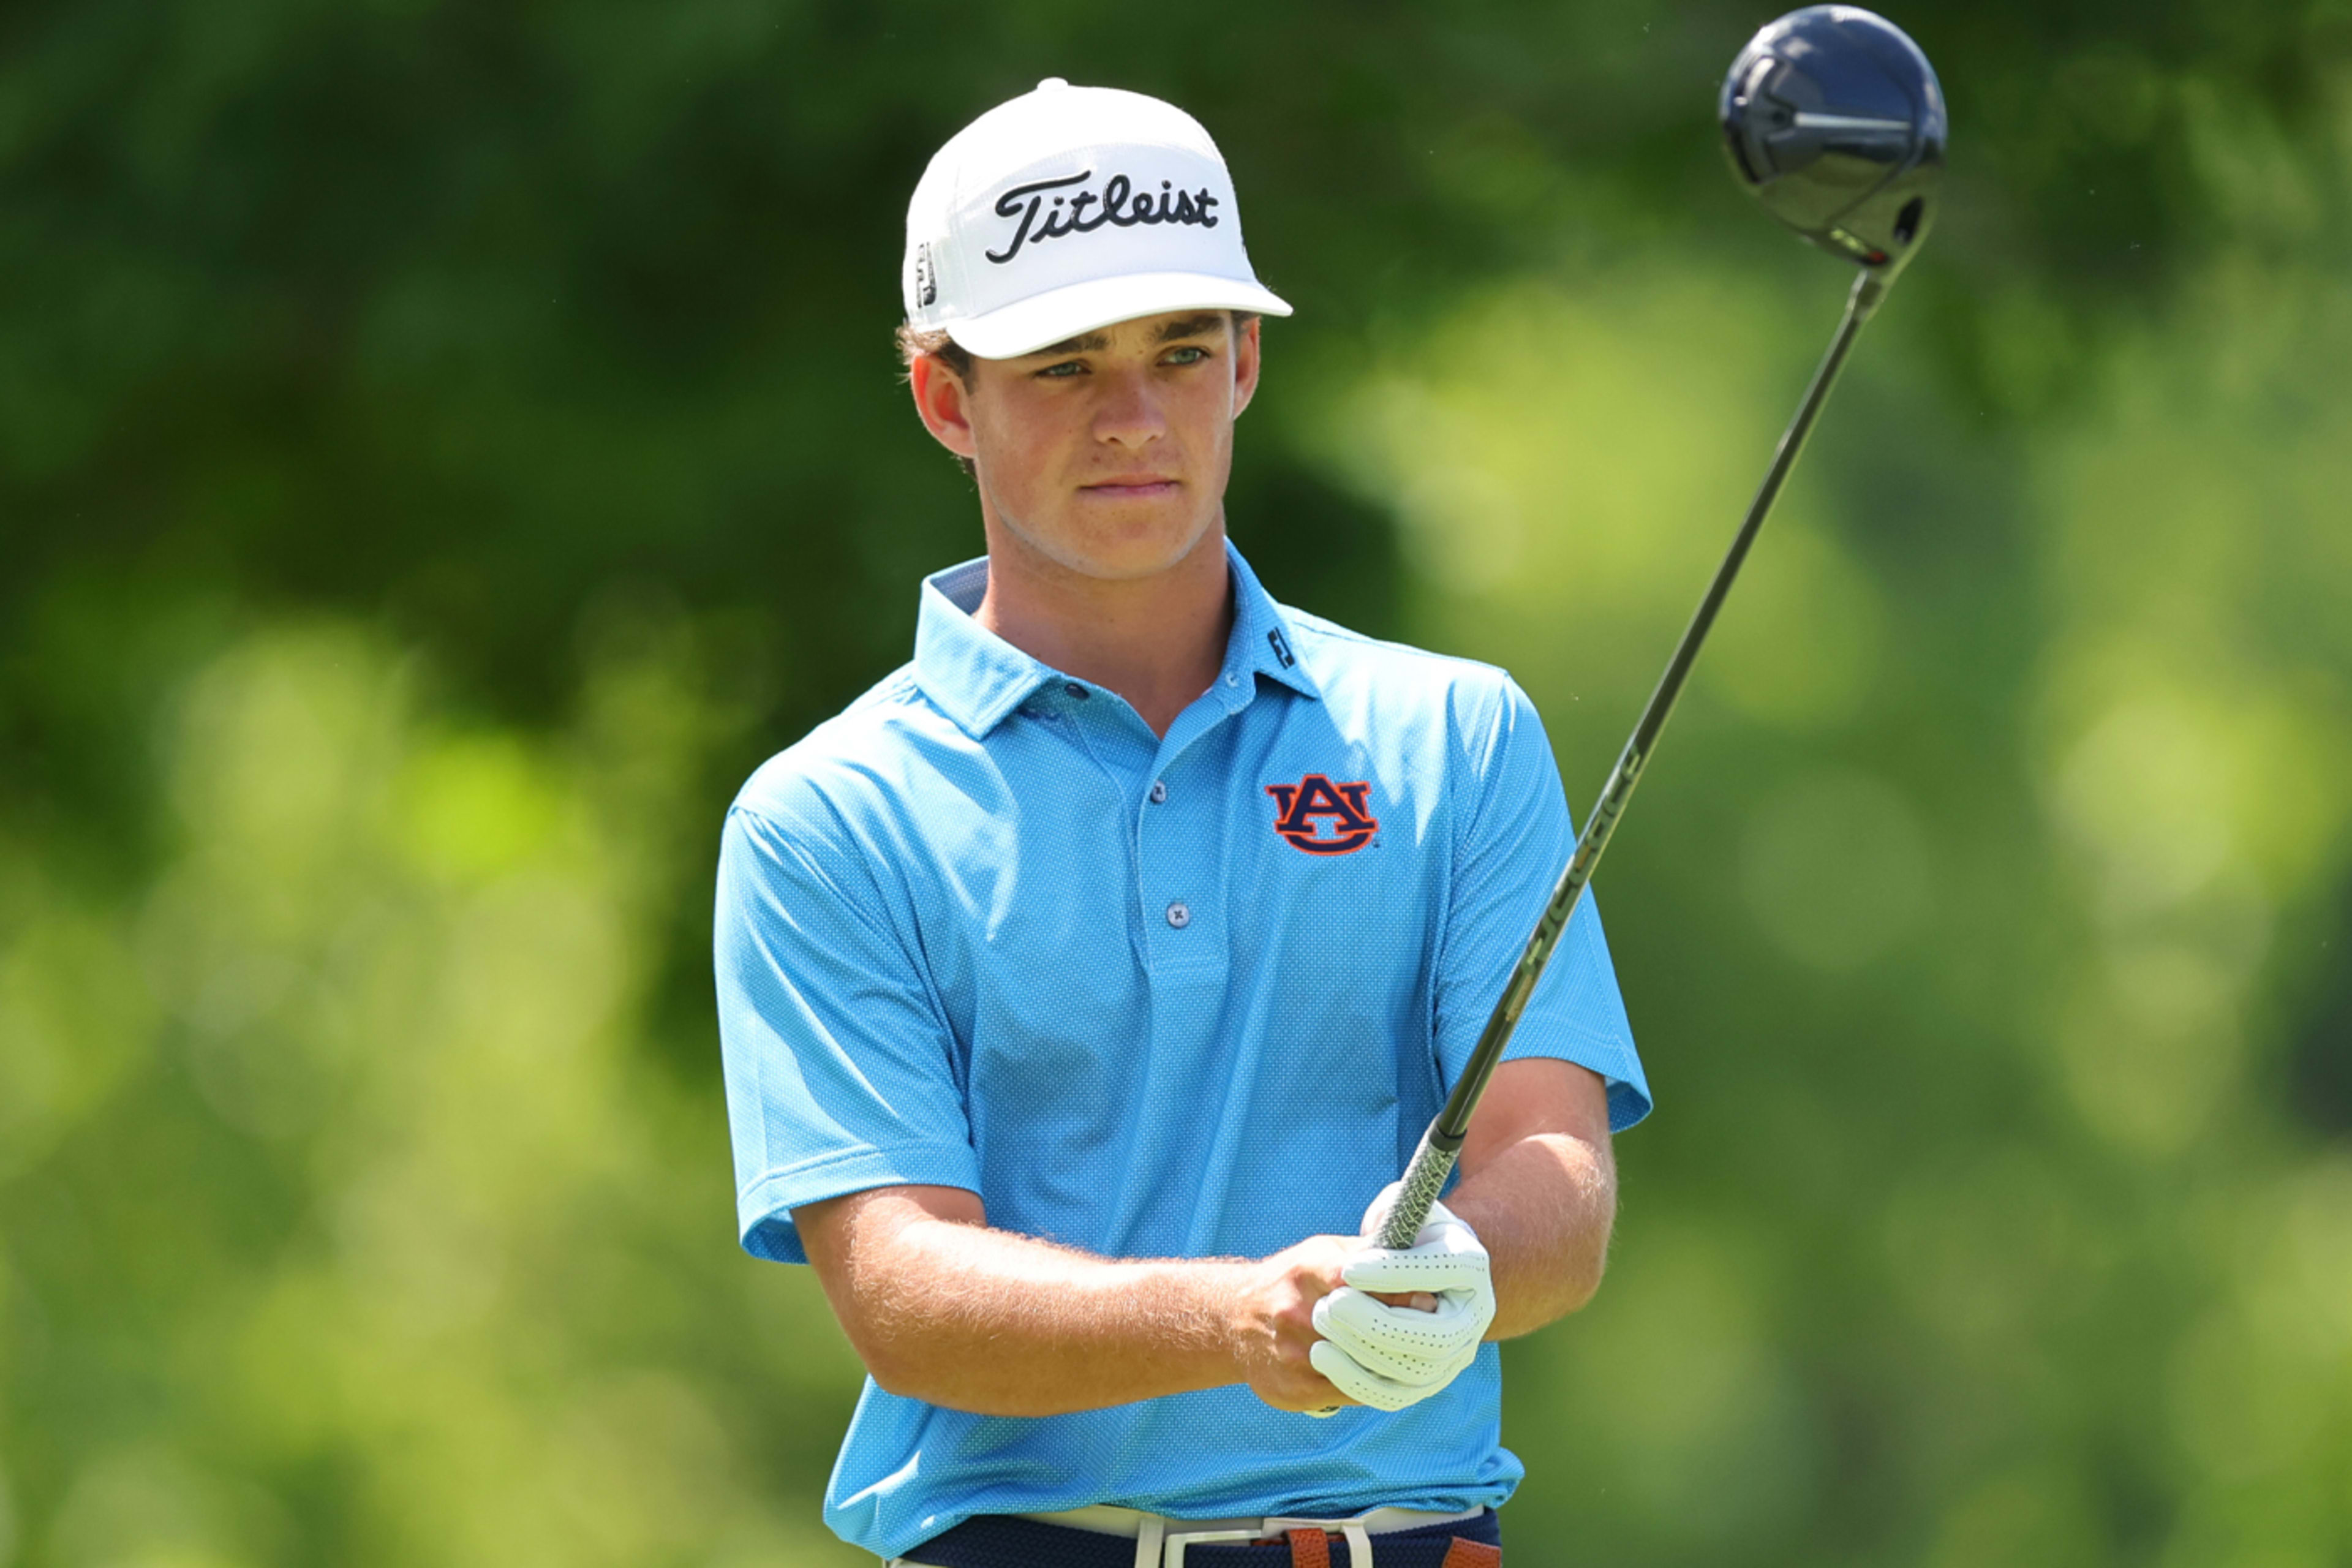 Auburn freshman Jackson Koivun makes cut at the Memorial in PGA TOUR debut, one step closer to earning card